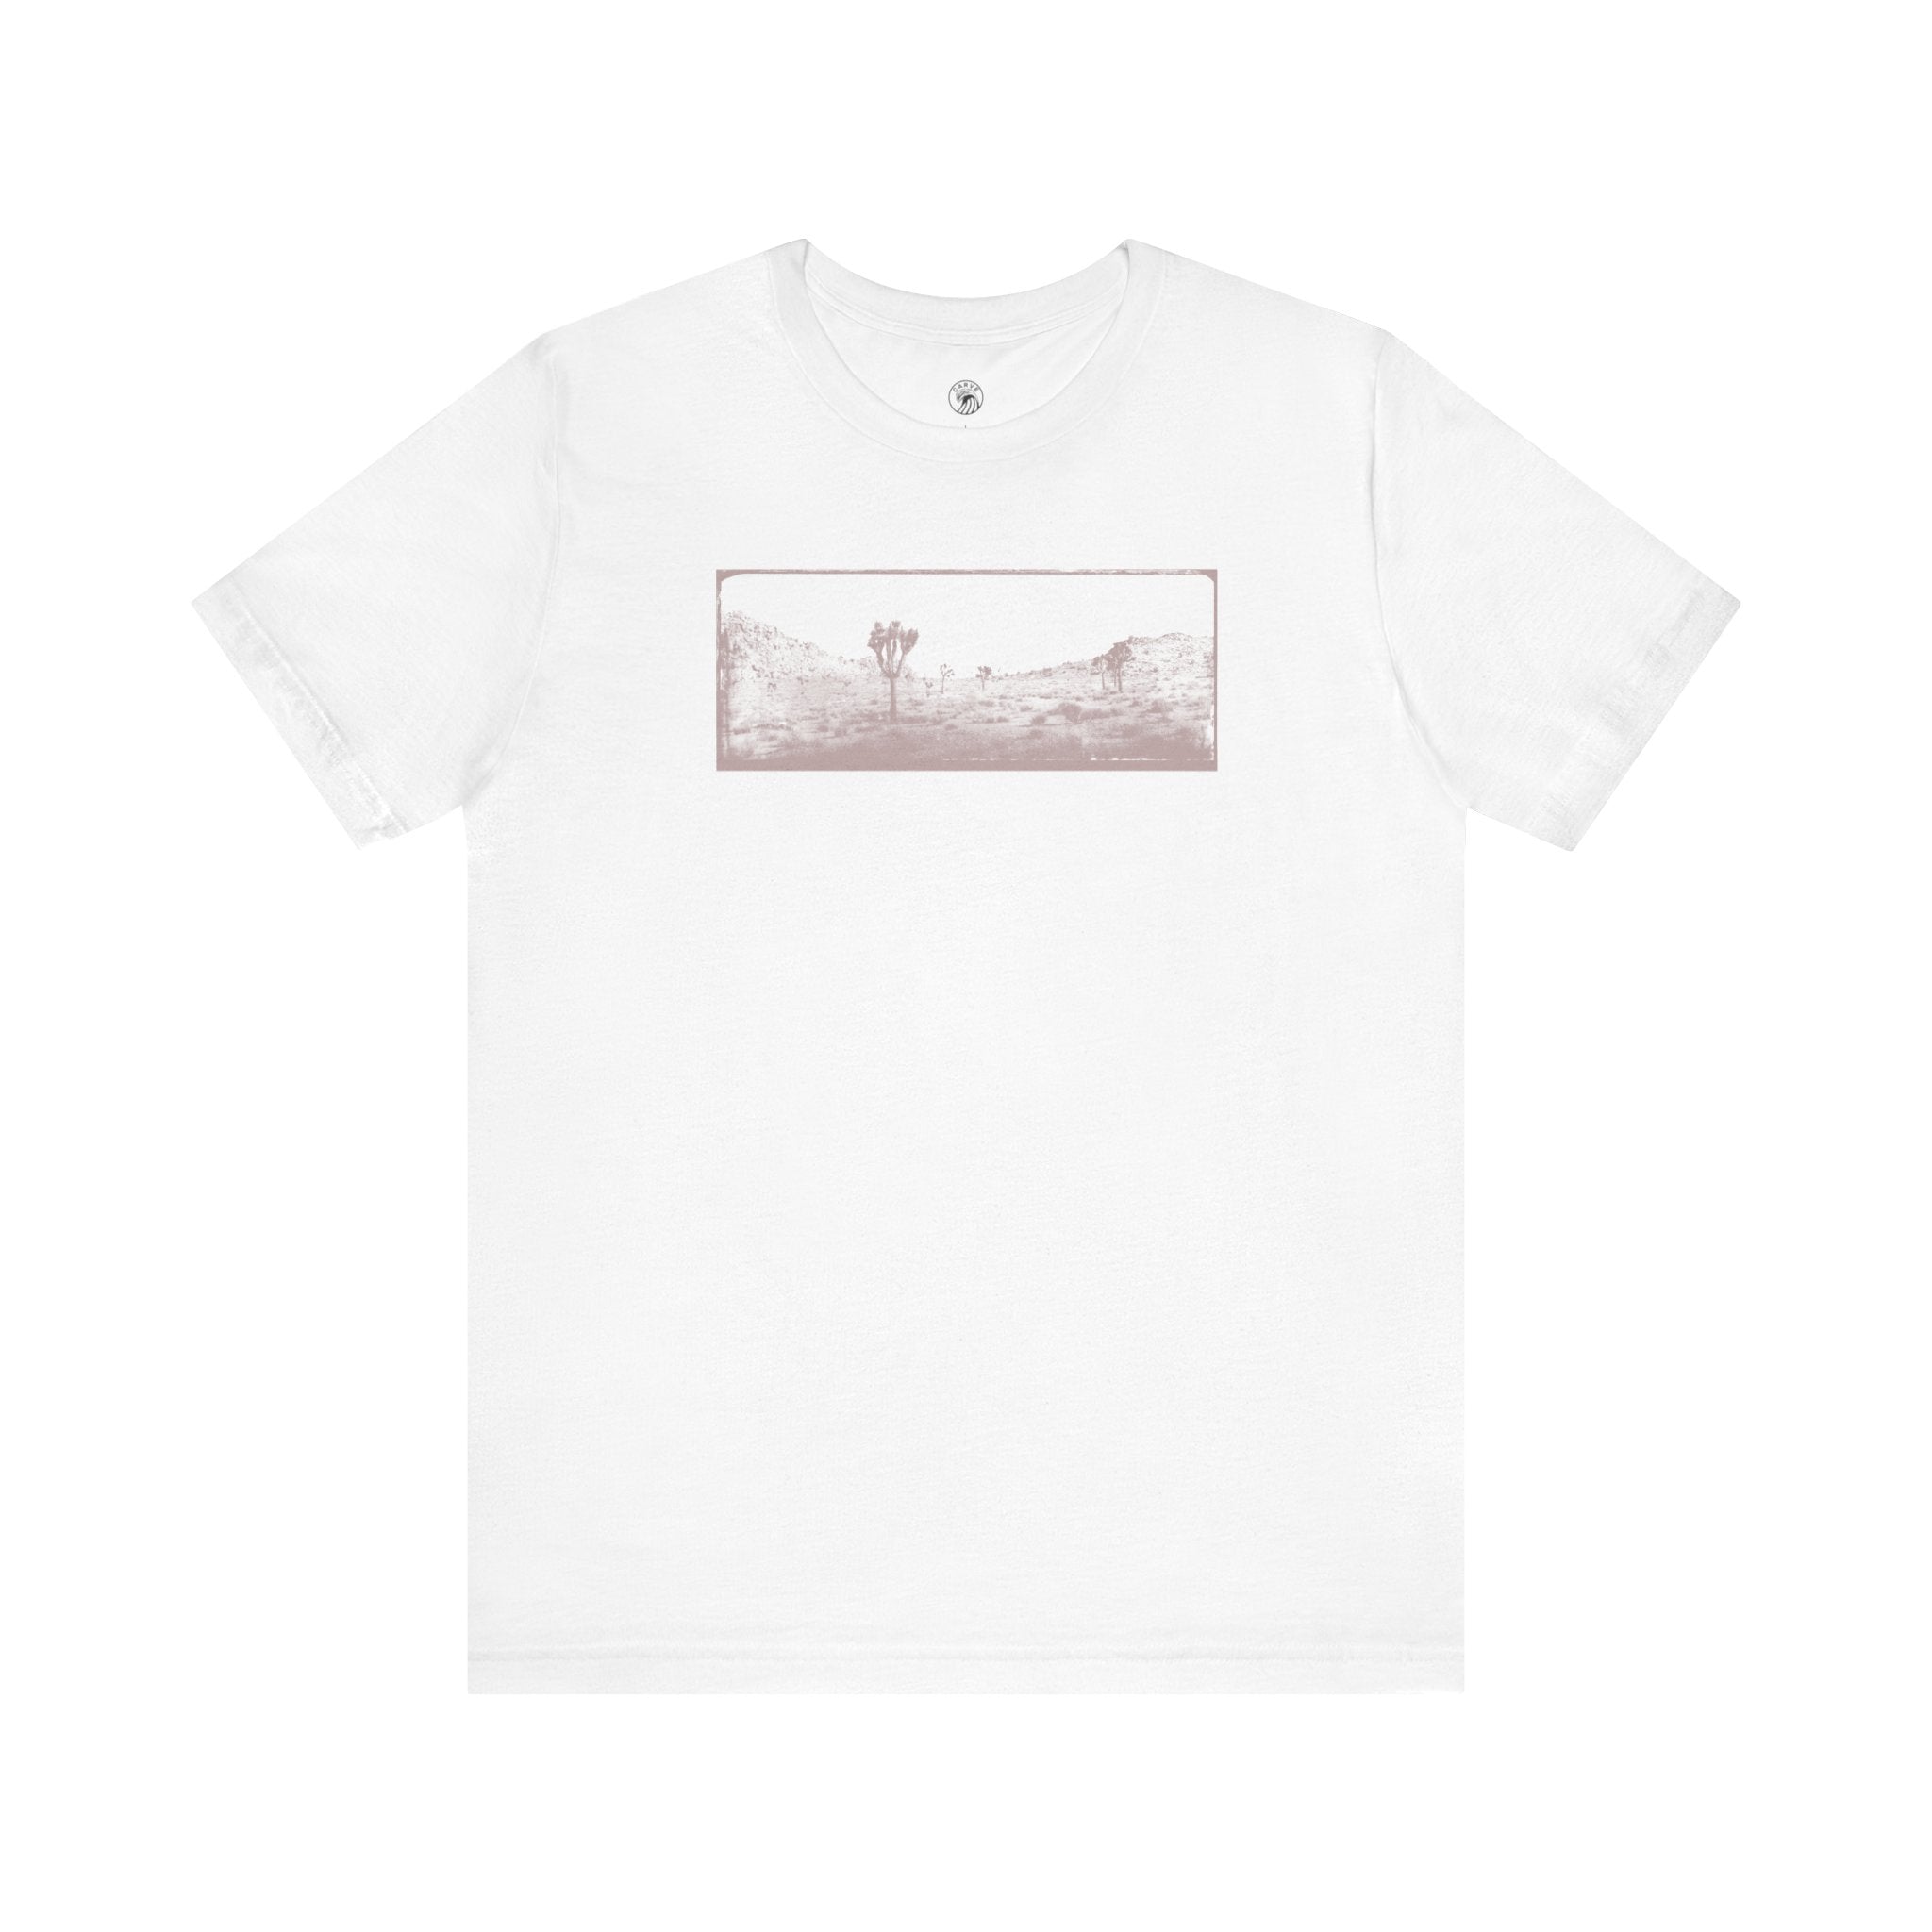 T-shirt: Joshua Tree Pano